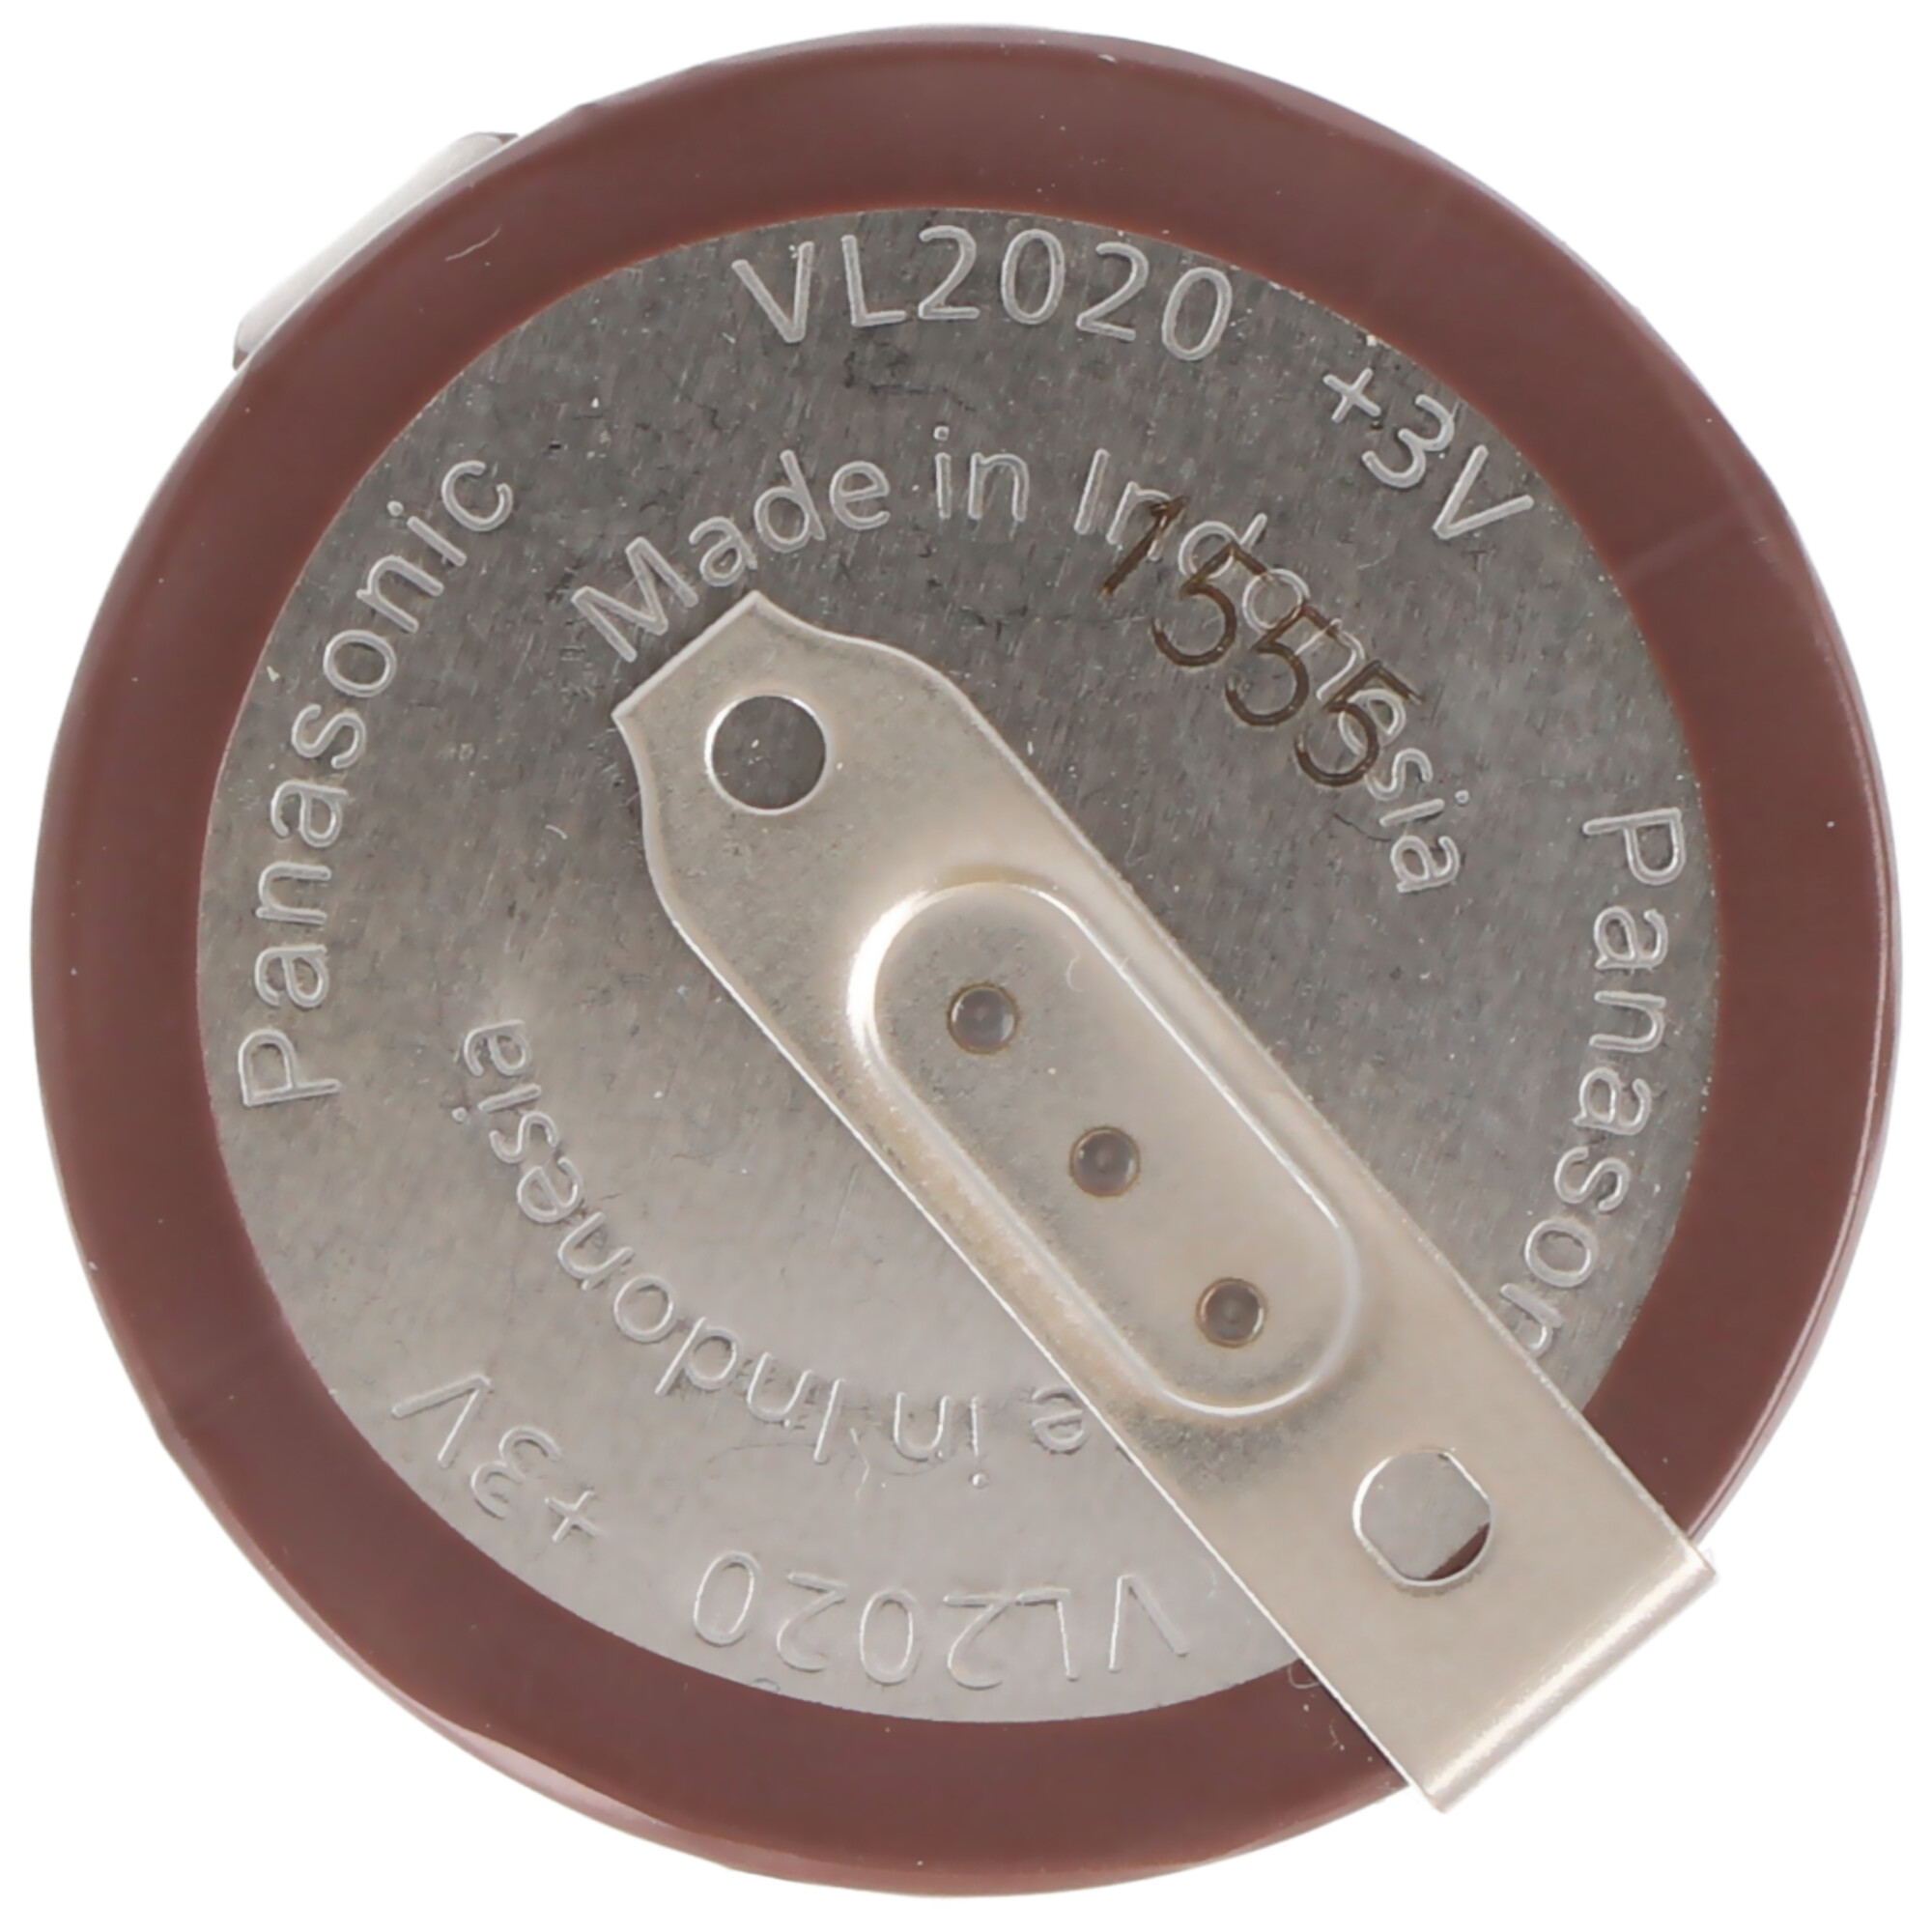 Panasonic VL2020-1HF Knopfzelle Vanadium-Lithium Akku aufladbar